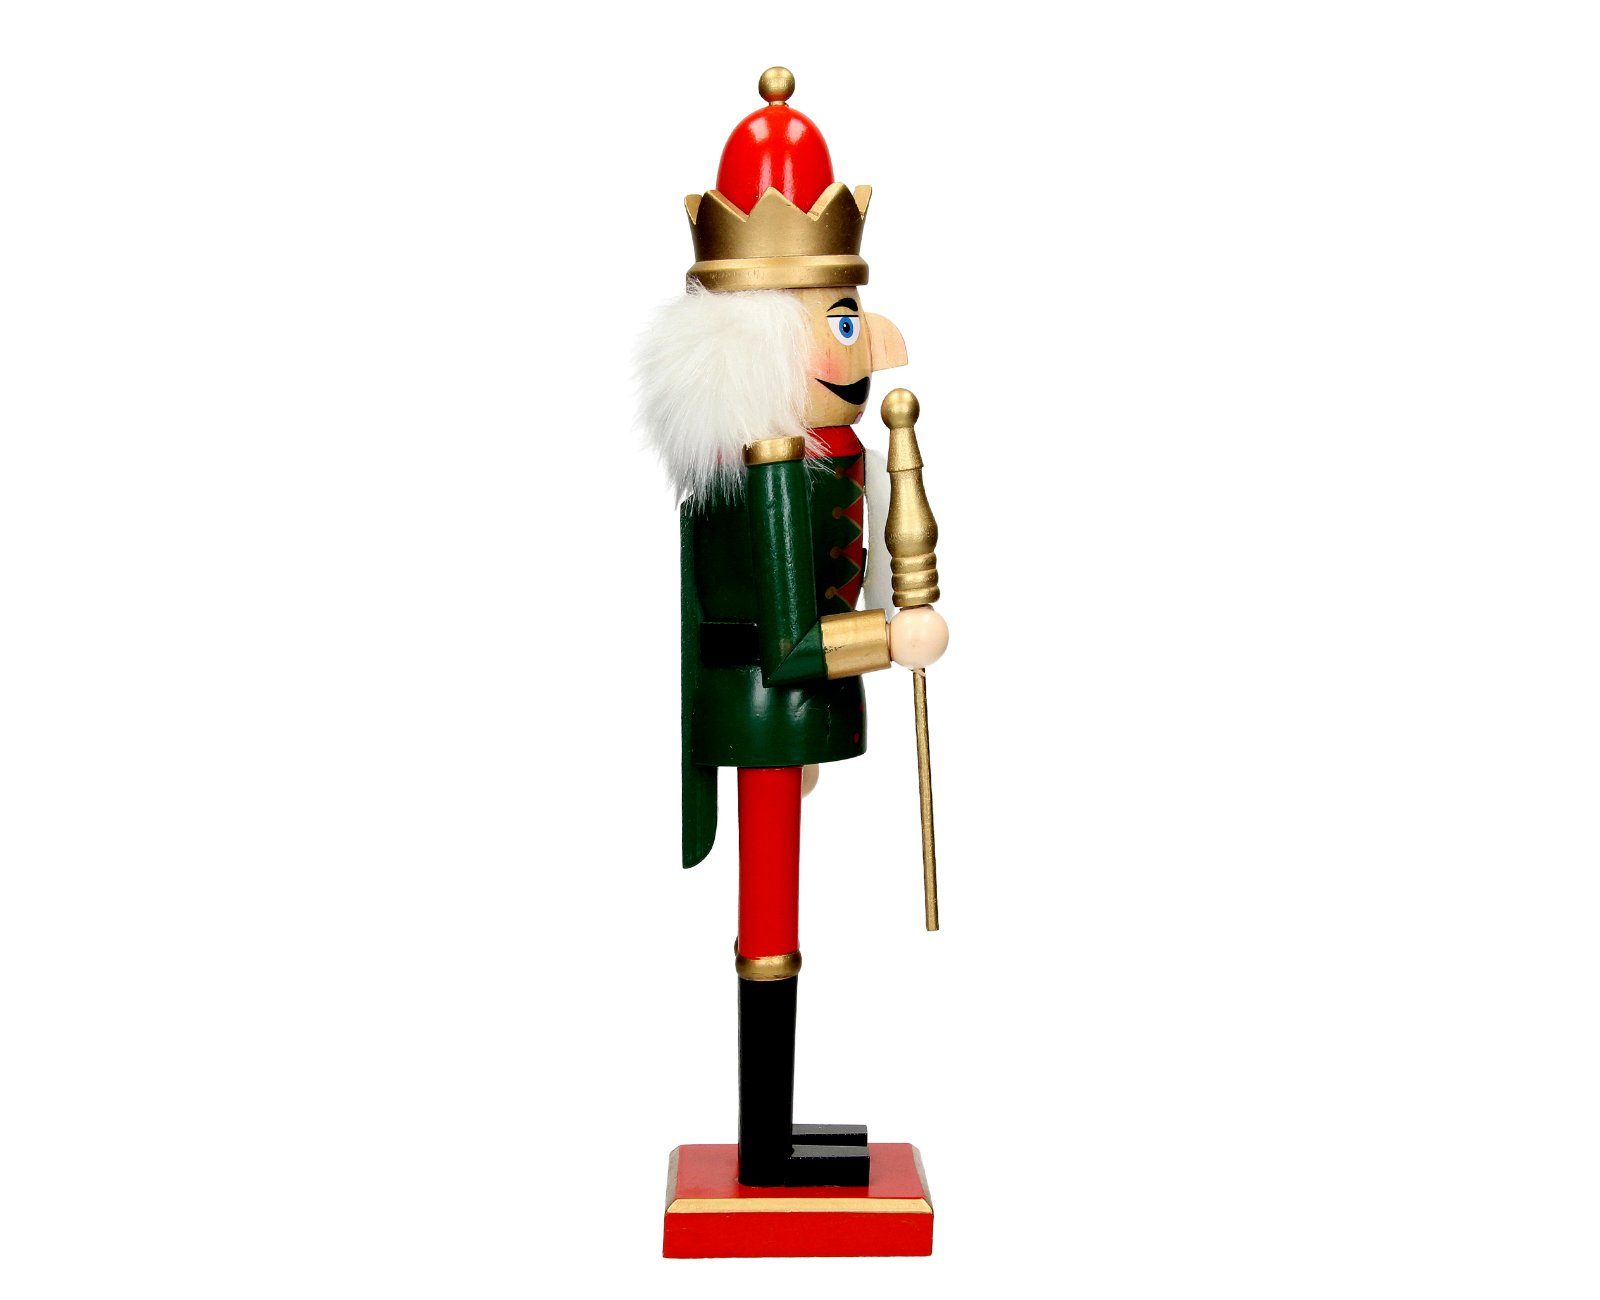 HAGO Holz Nussknacker Nussbeisser rot Erzgebirge Unikat Weihnachtsfigur Volkskunst Figur Deko